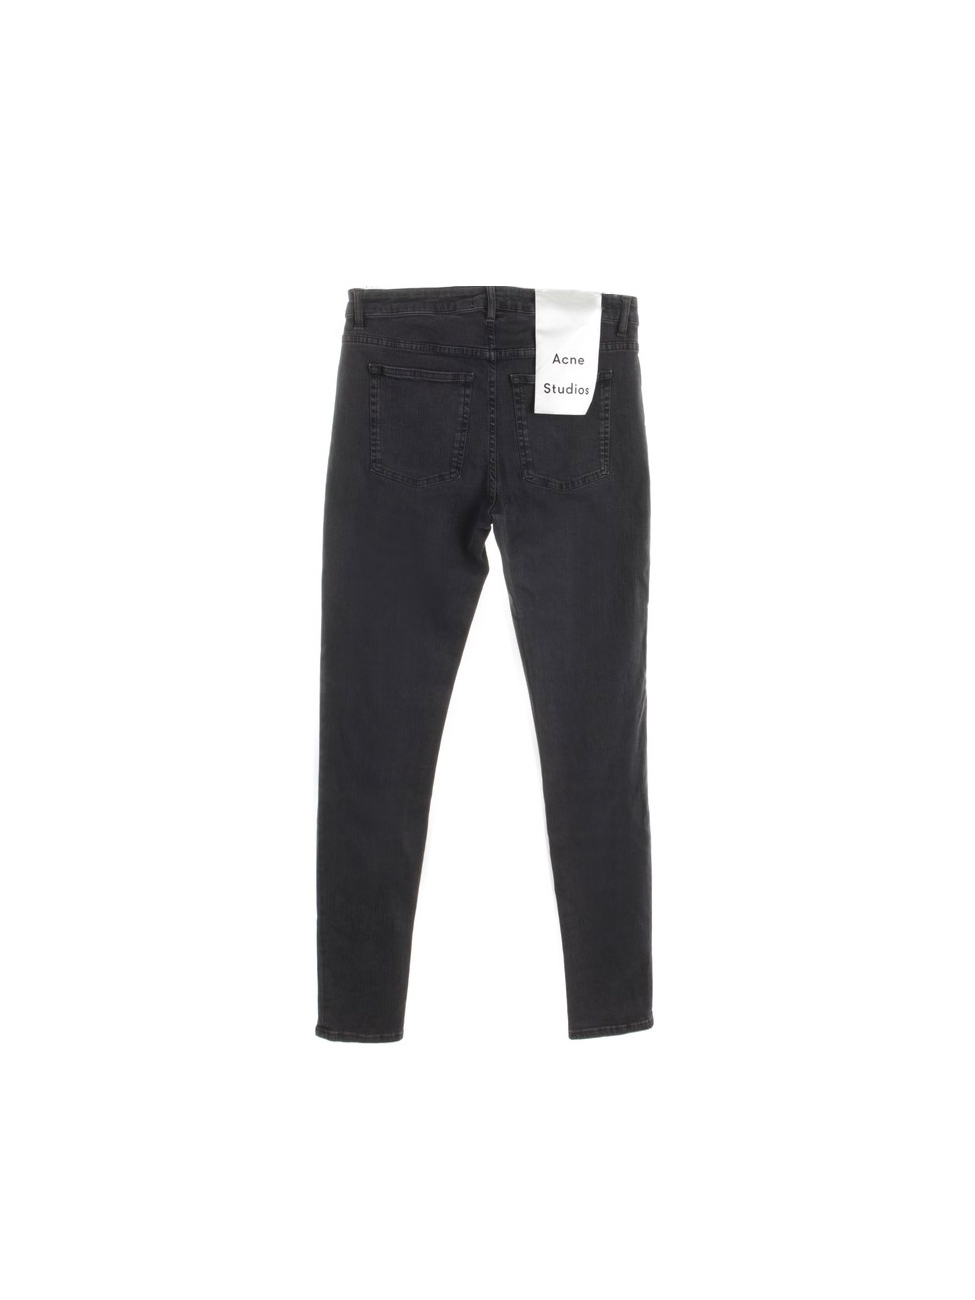 Boutique ACNE STUDIOS Skin Pocket Used Black " mid-rise skinny dark grey jeans Retail price $220 Size 30/34